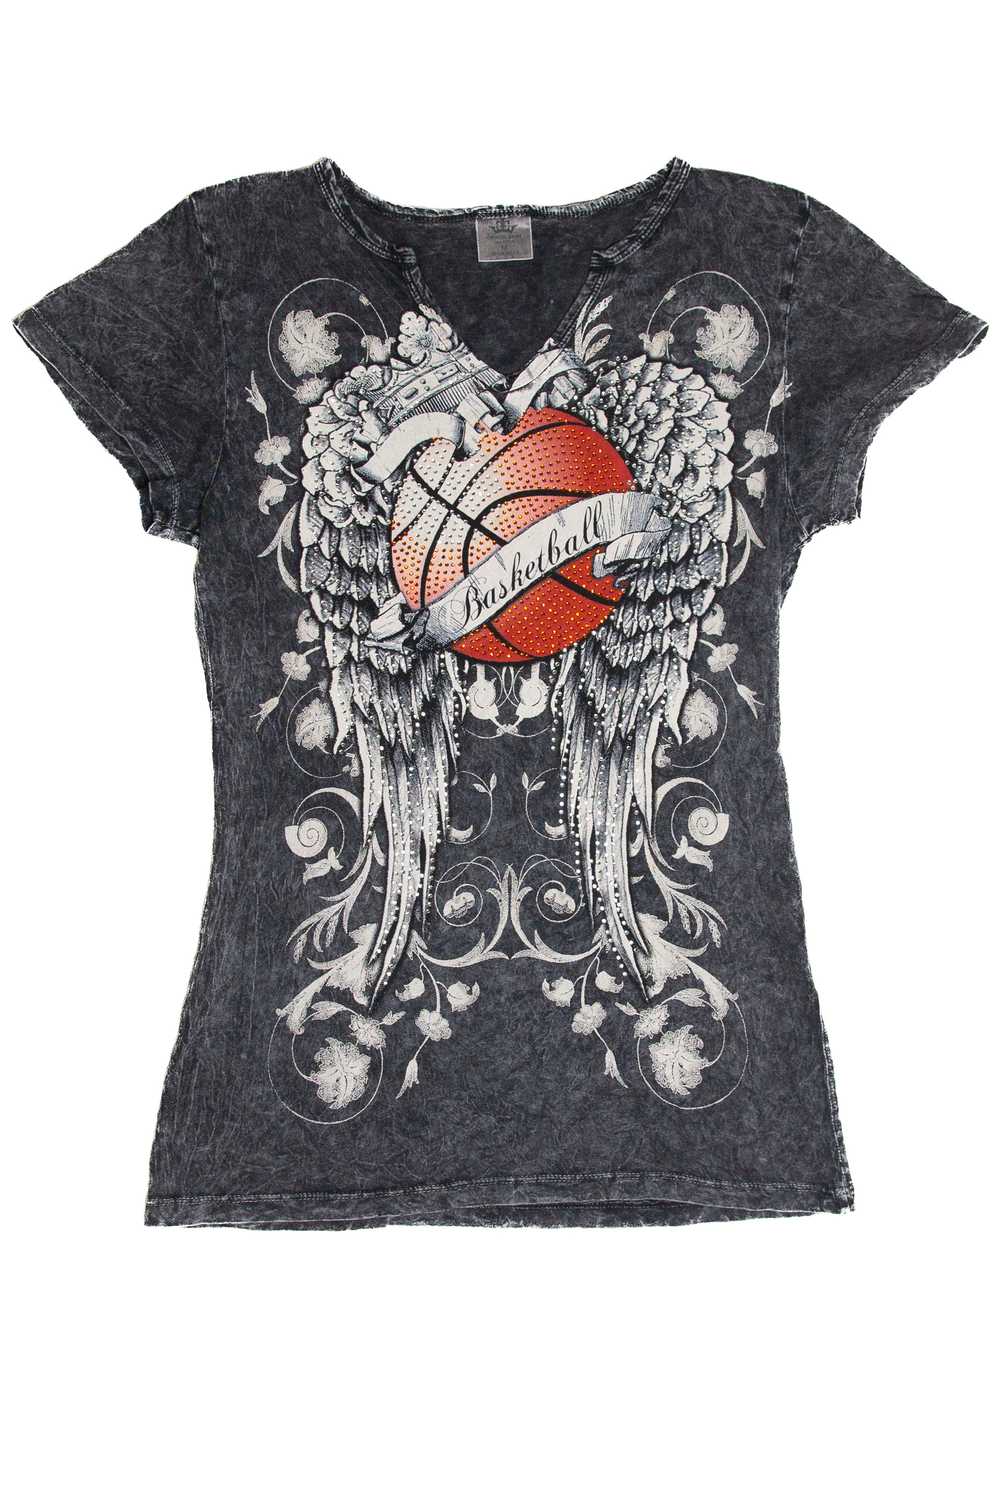 Basketball Rhinestone T-Shirt - image 1